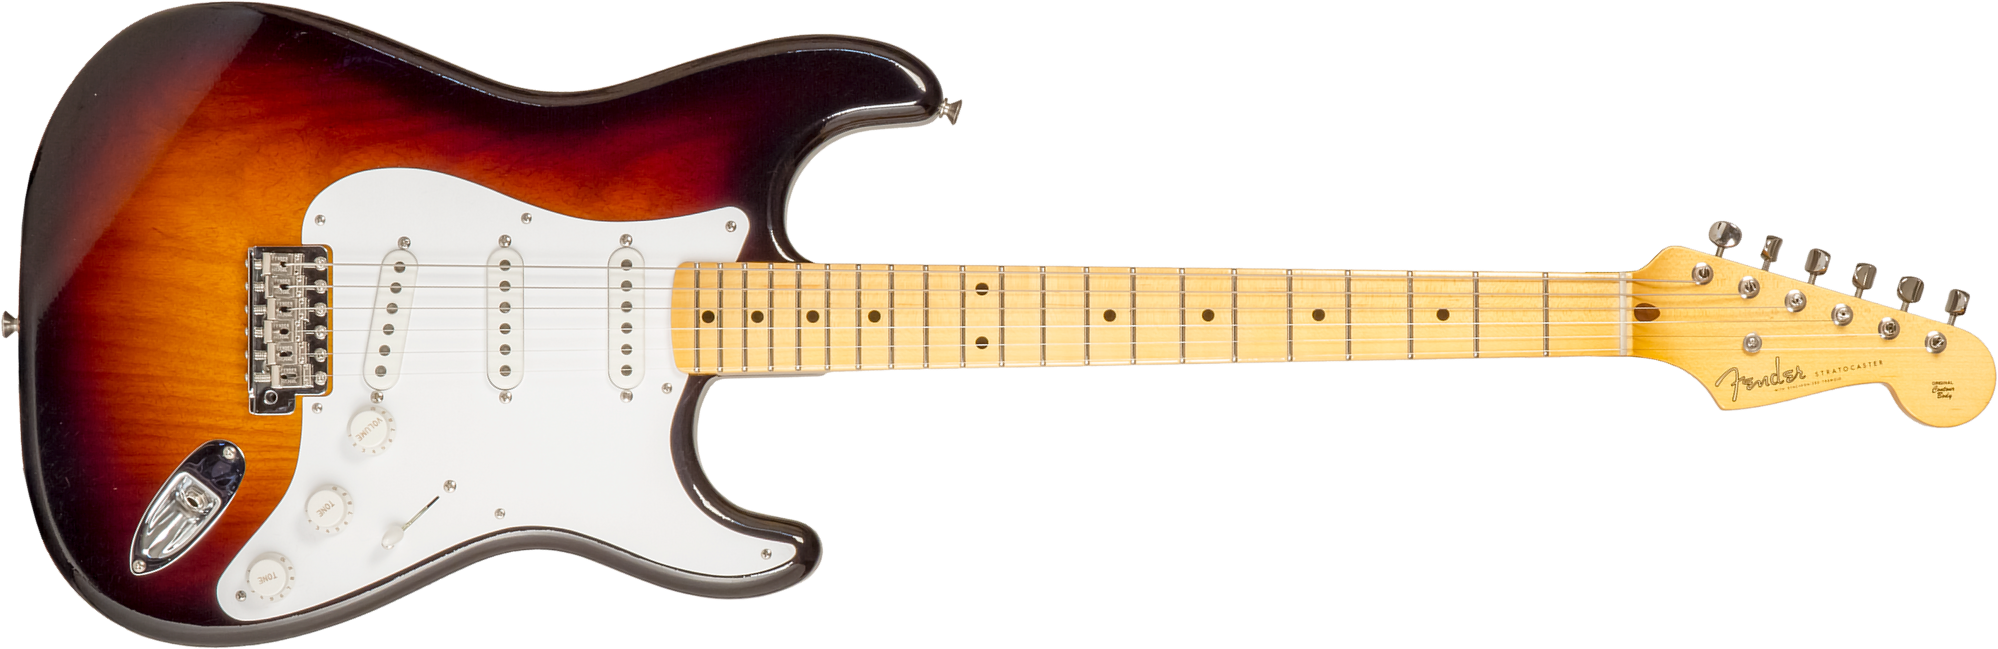 Fender Custom Shop Strat 1954 70th Anniv. 3s Trem Mn #xn4356 - Closet Classic Wide Fade 2-color Sunburst - Guitarra eléctrica con forma de str. - Main